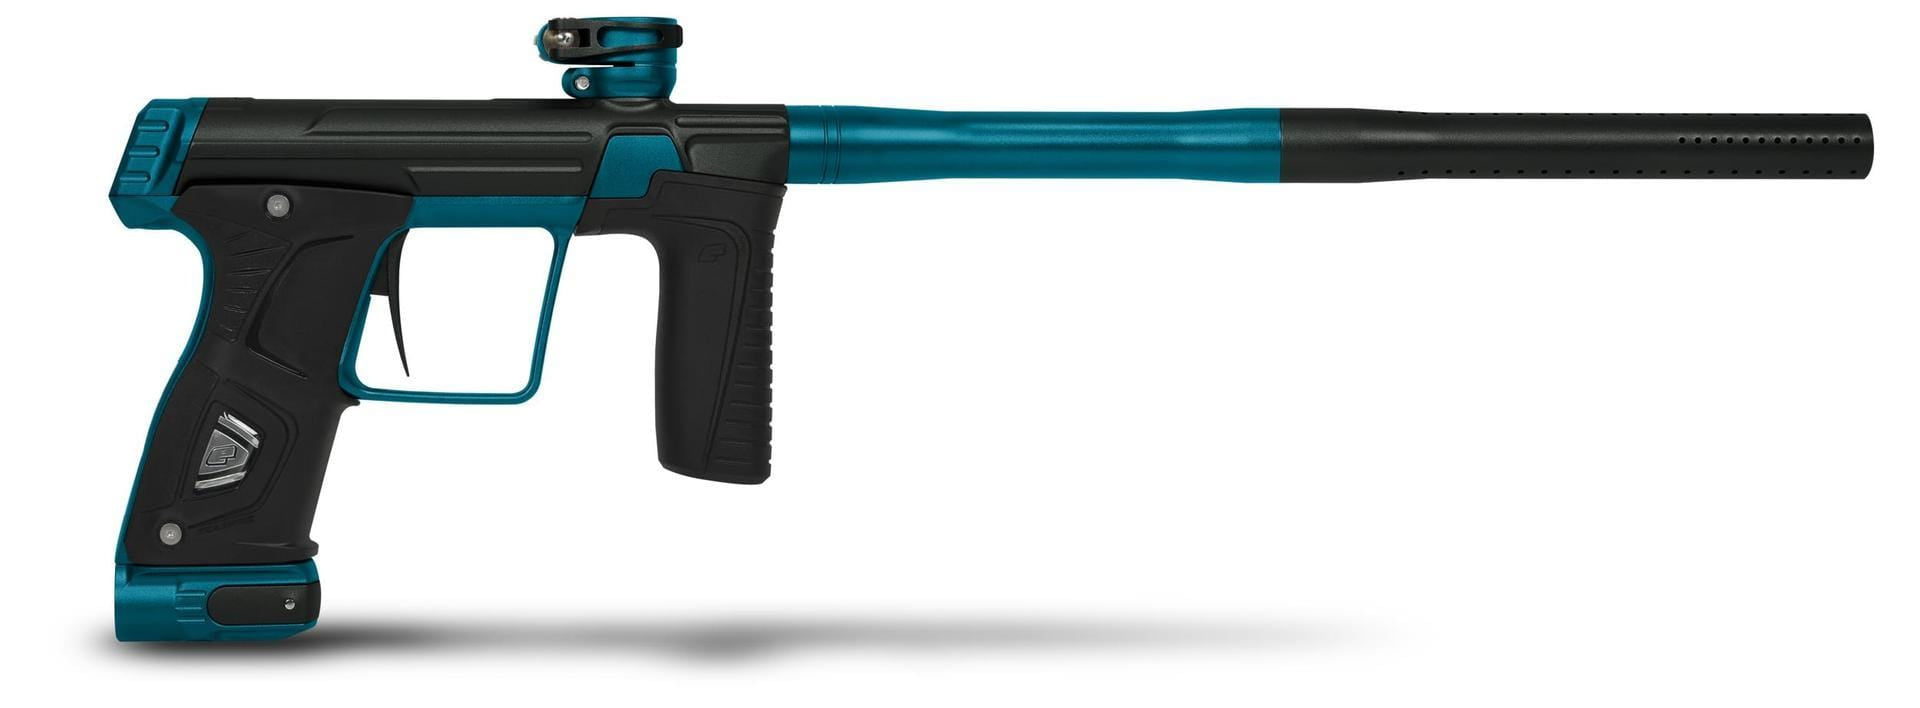 PLANET ECLIPSE GTEK 170R PAINTBALL GUN - GREY/ BLUE - Eminent Paintball And Airsoft